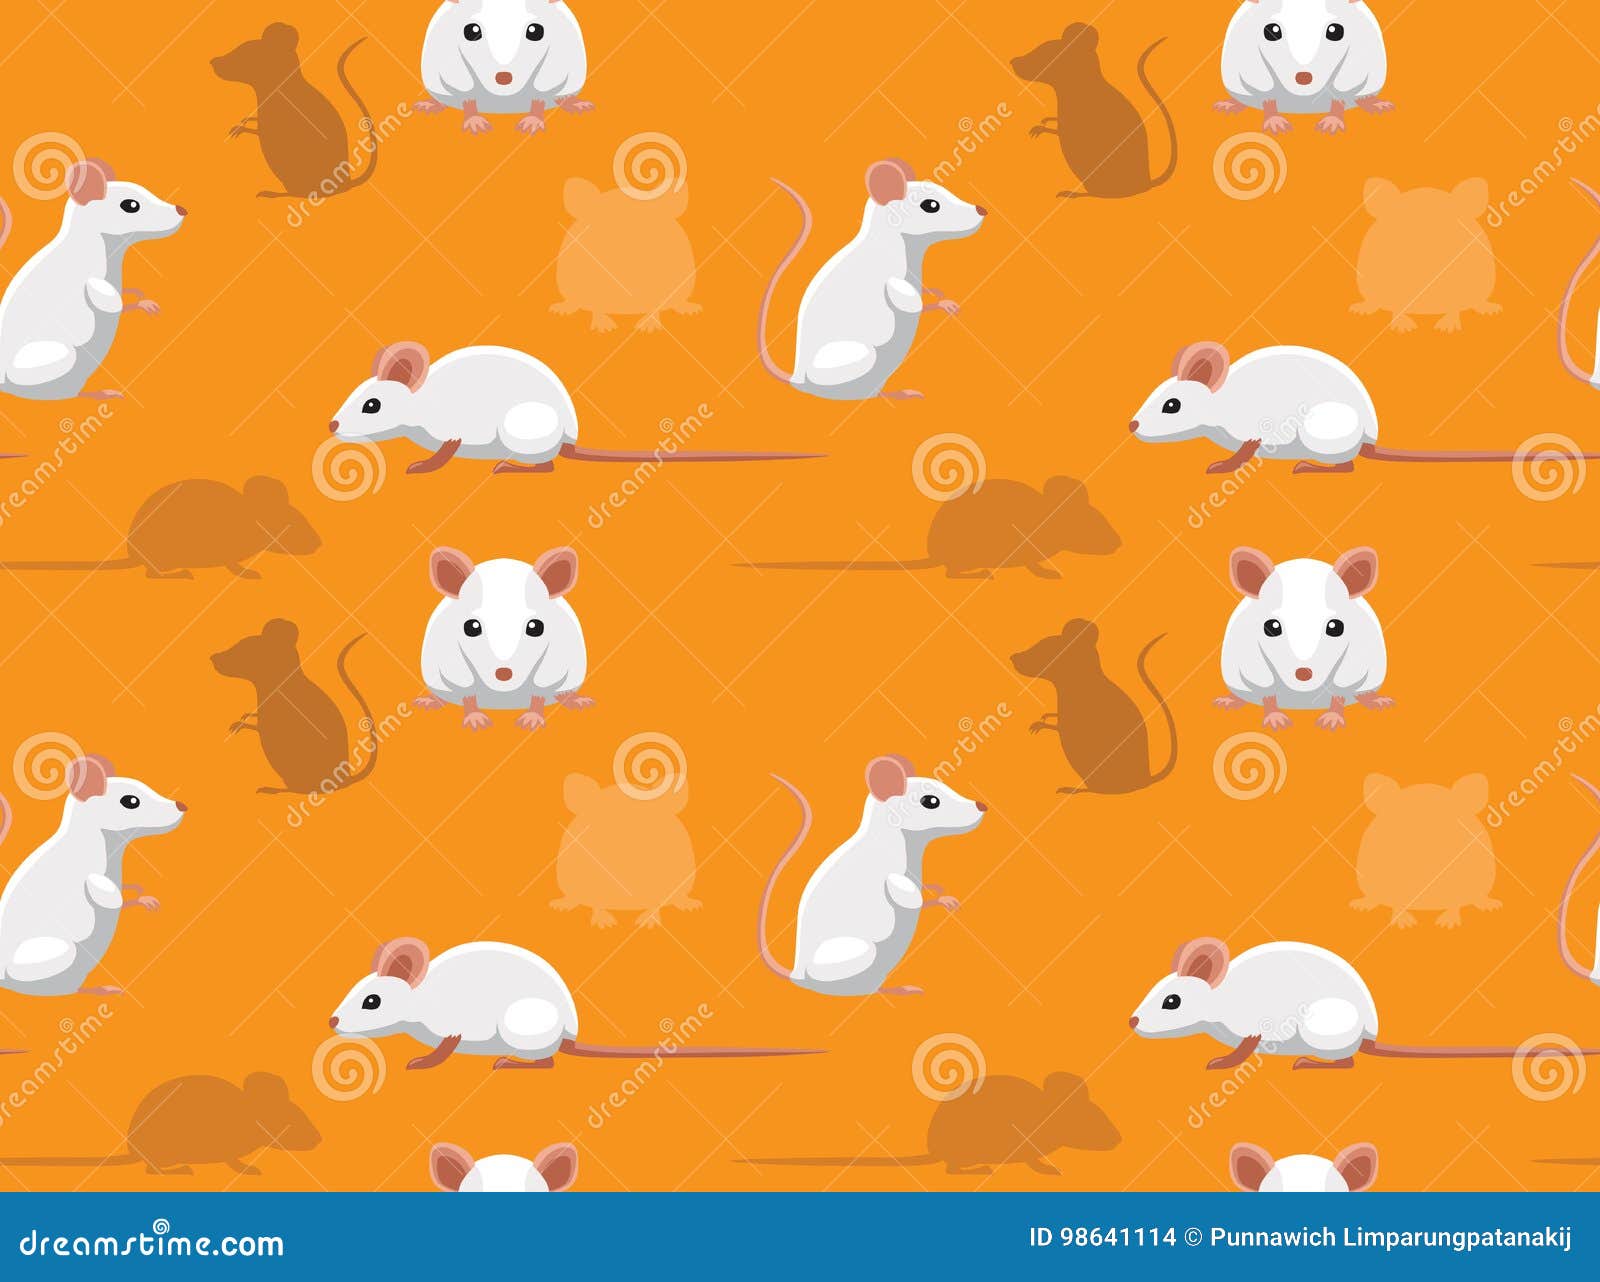 Fancy Mouse Cartoon Seamless Wallpaper Stock Vector - Illustration of  animal, albino: 98641114